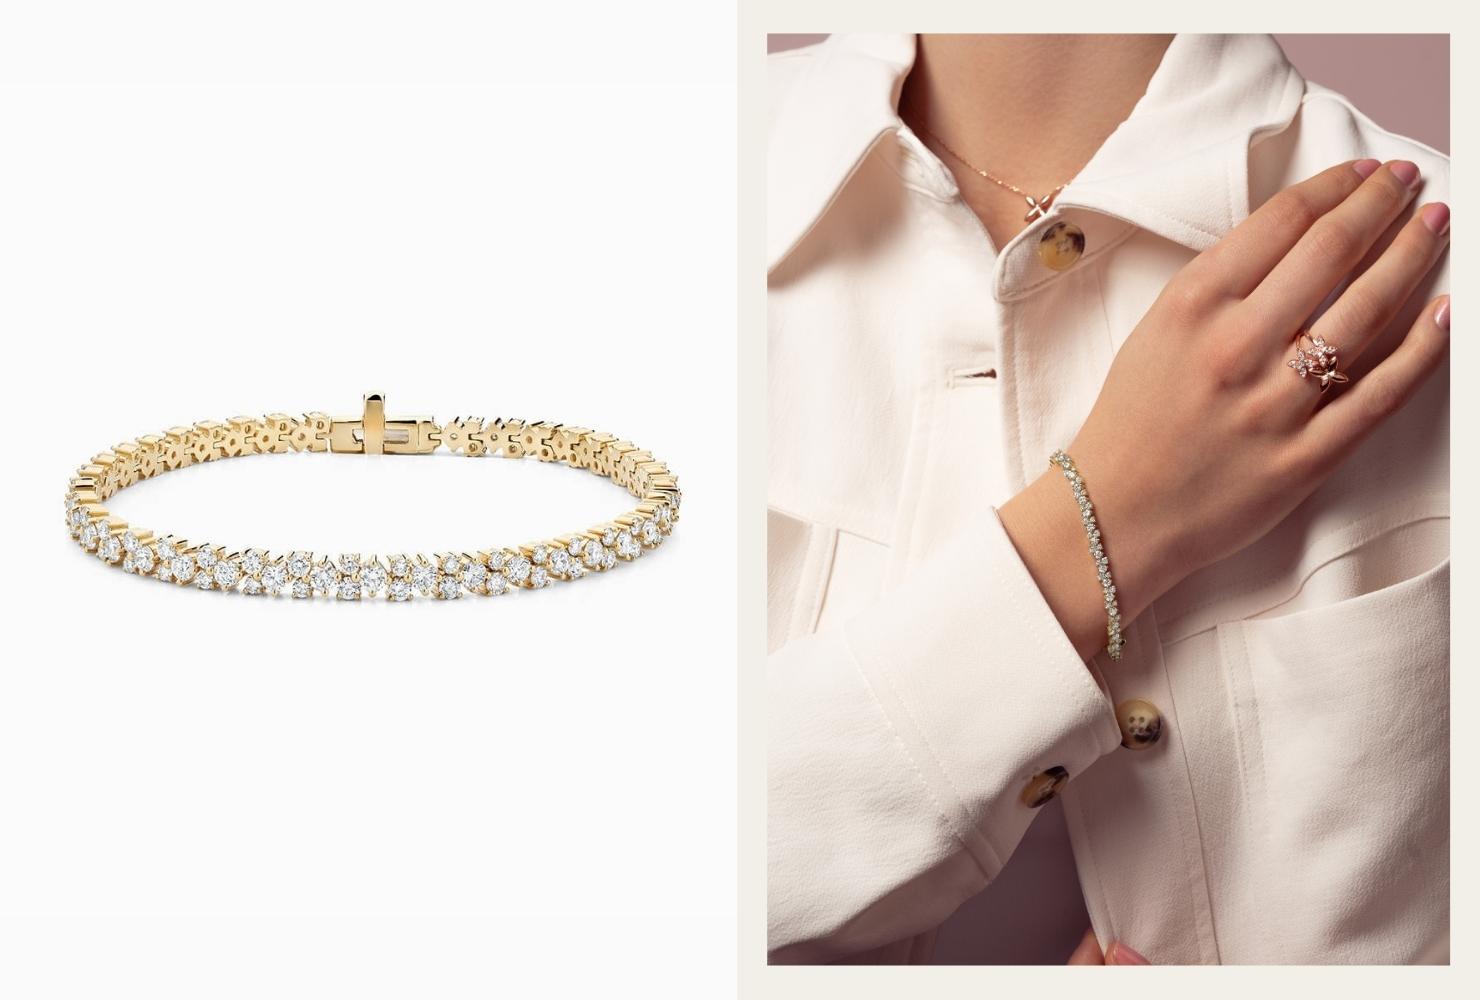 Image of Ecksand's Interlocking Diamond Tennis Bracelet next to an image of a model wearing it.